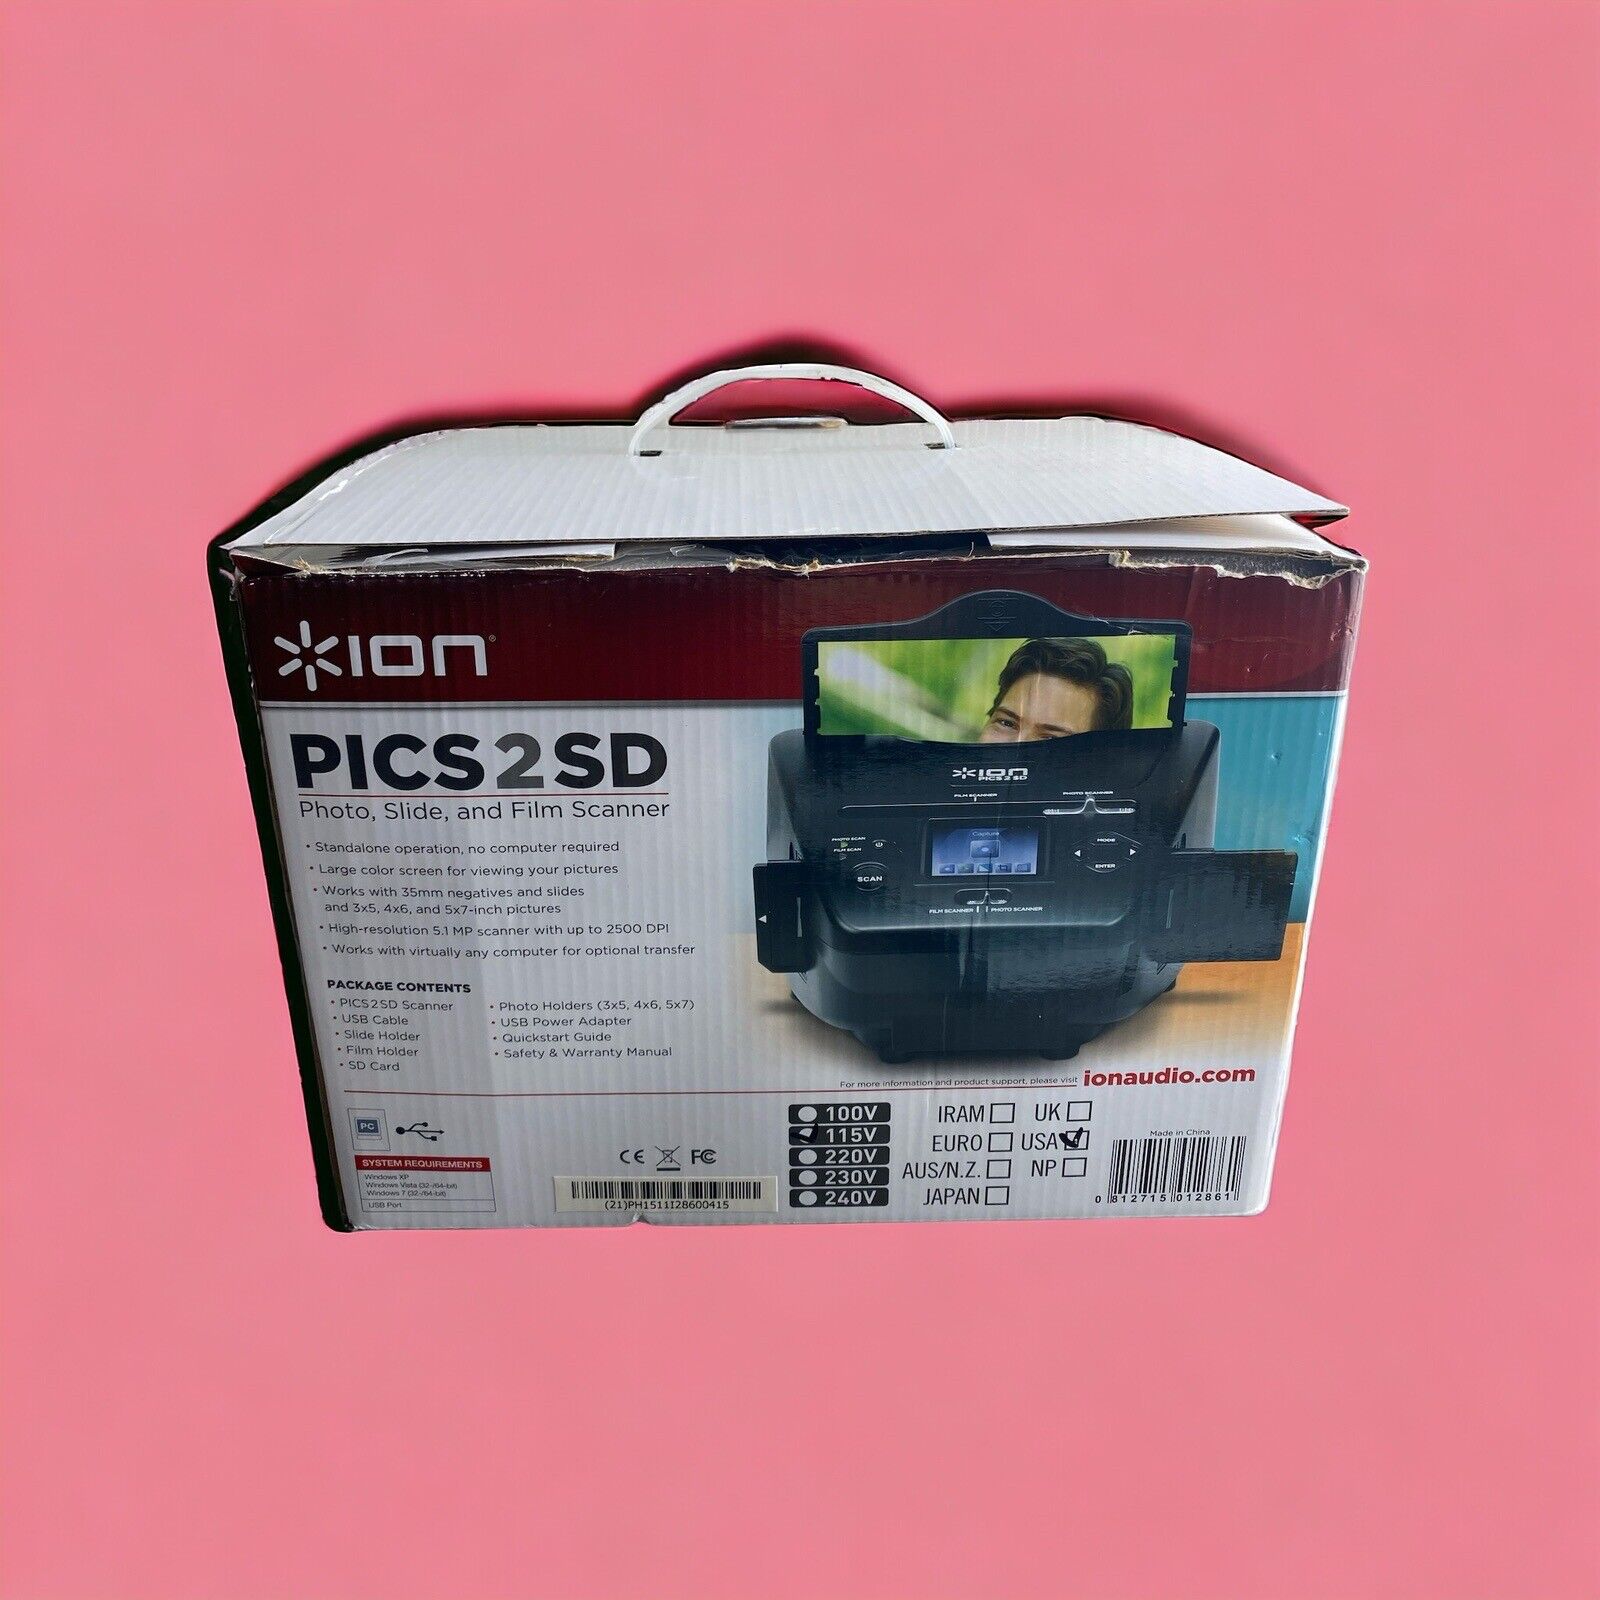 ION Audio Pics 2 SD Photo, Slide & Film Scanner